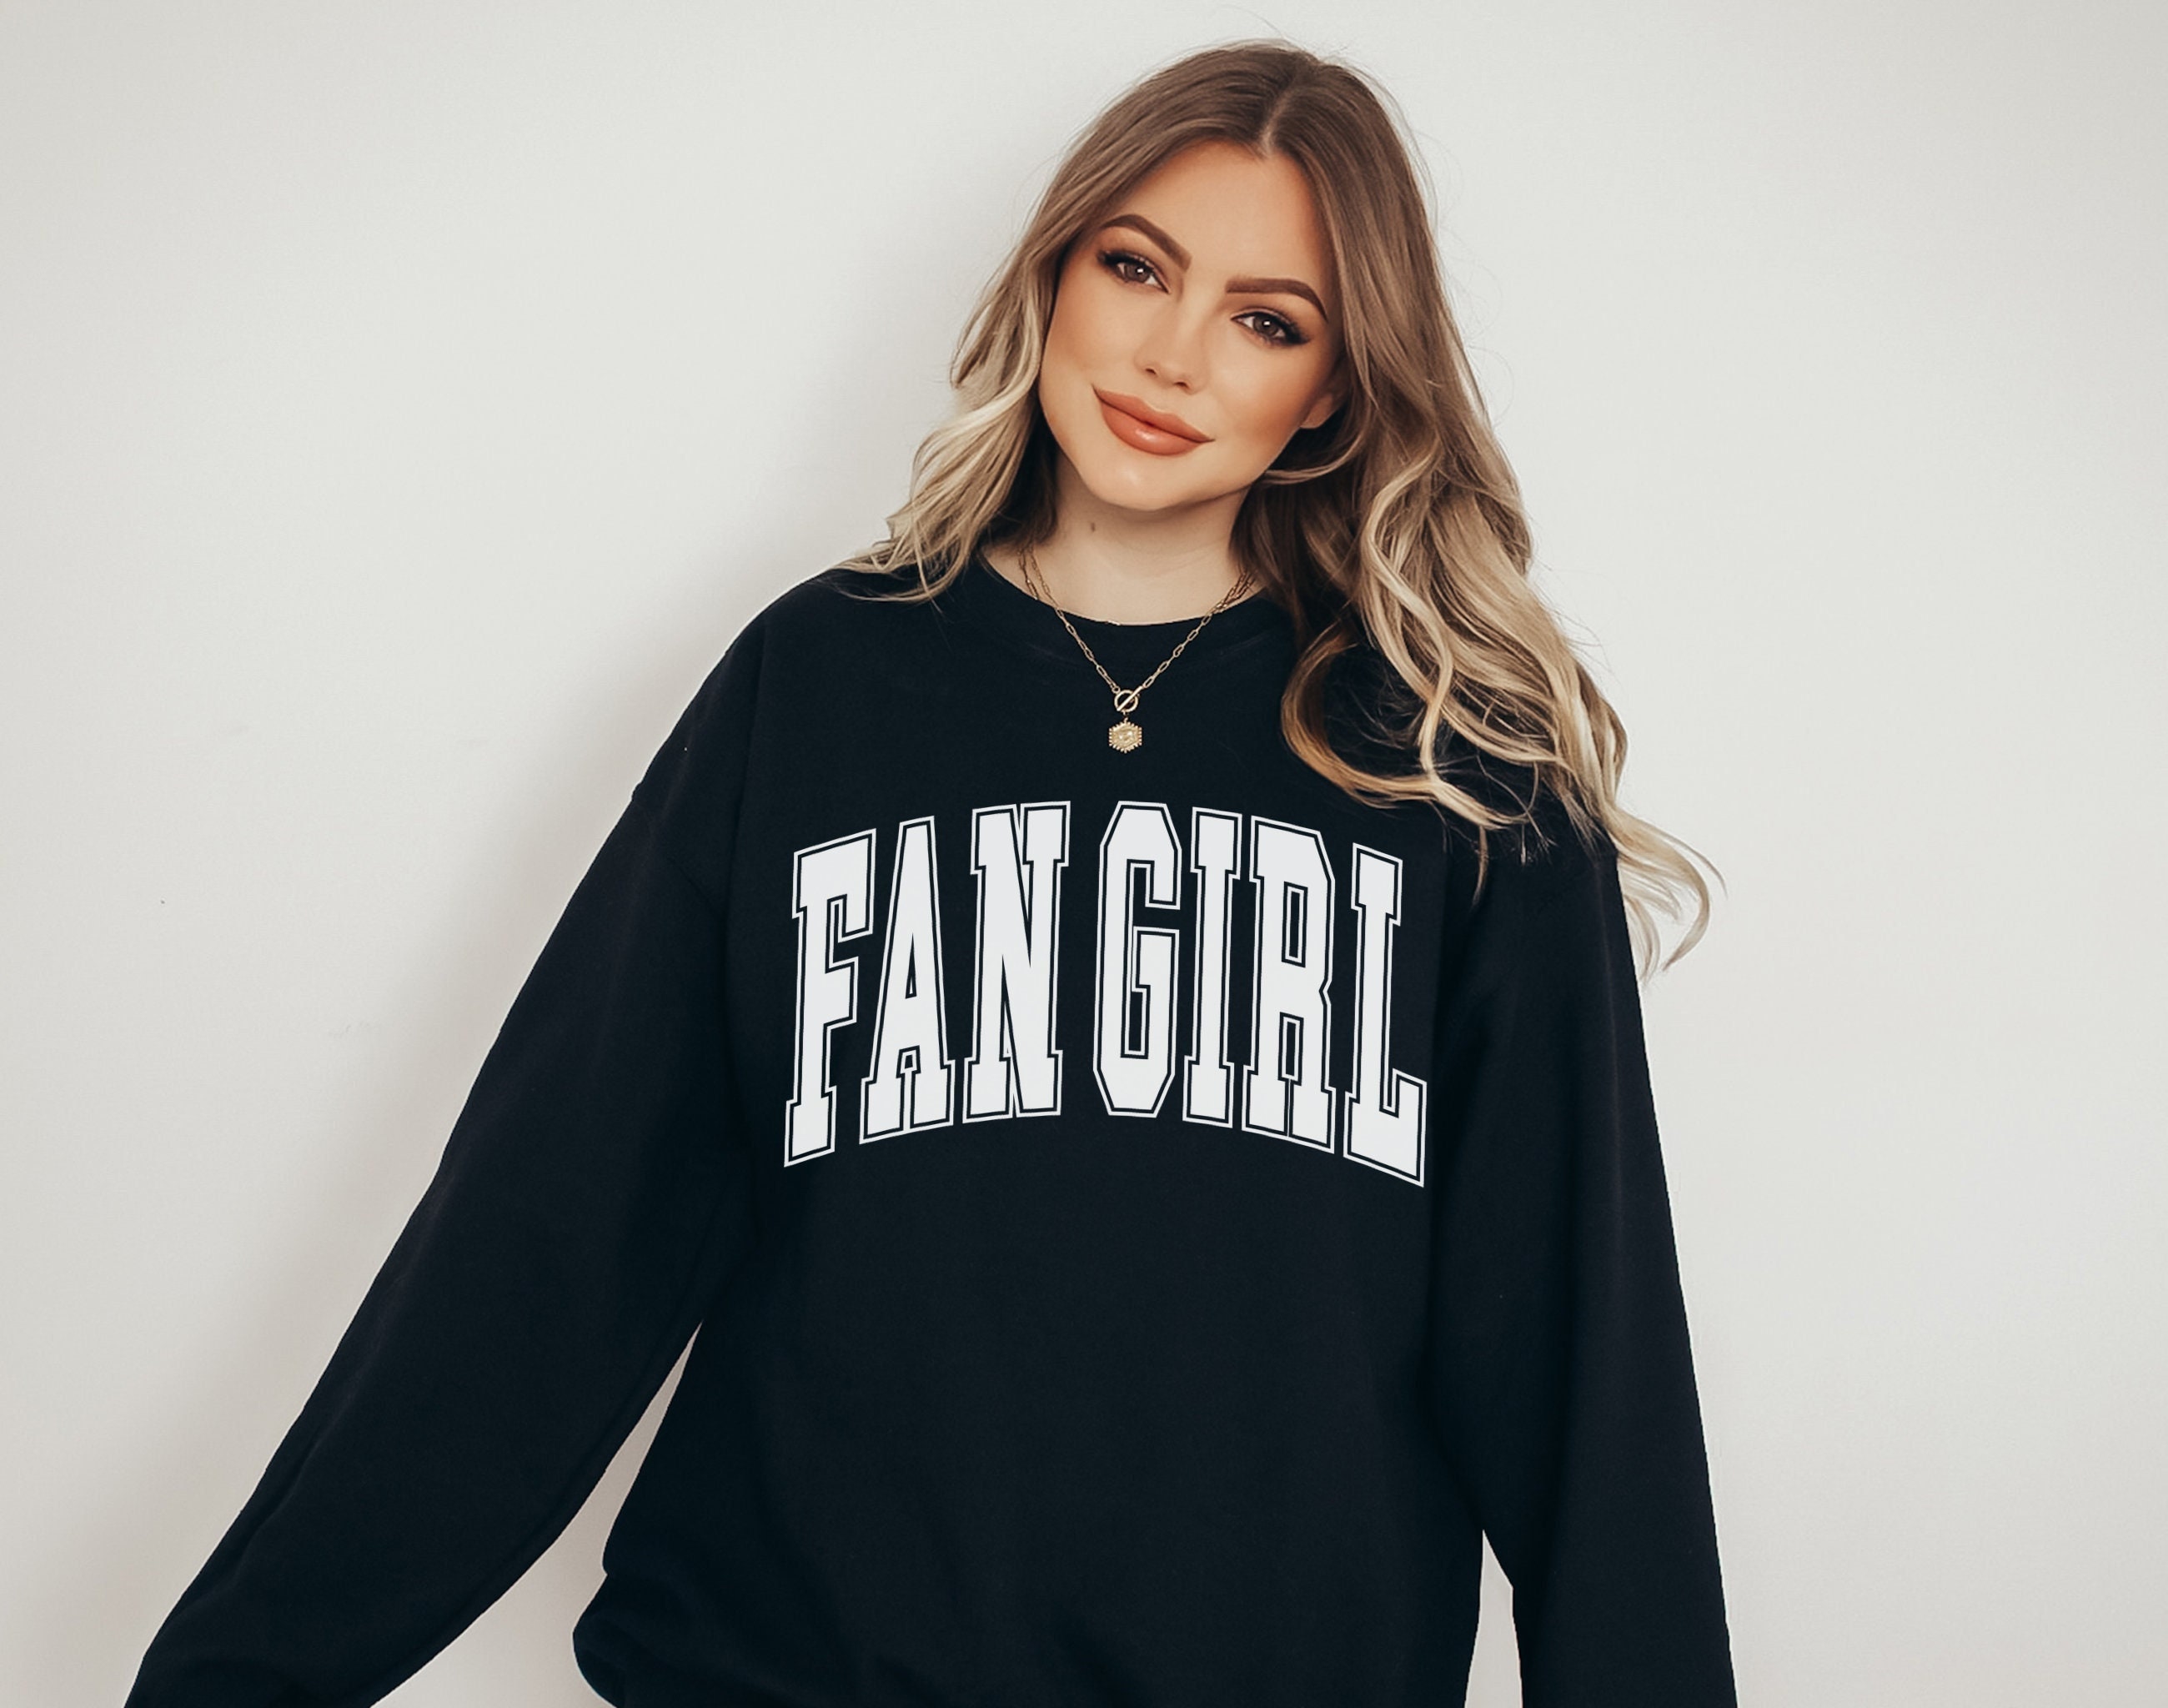 Fan Girl Clothing: Trendy Game Day Apparel for Fan Girls Like You.